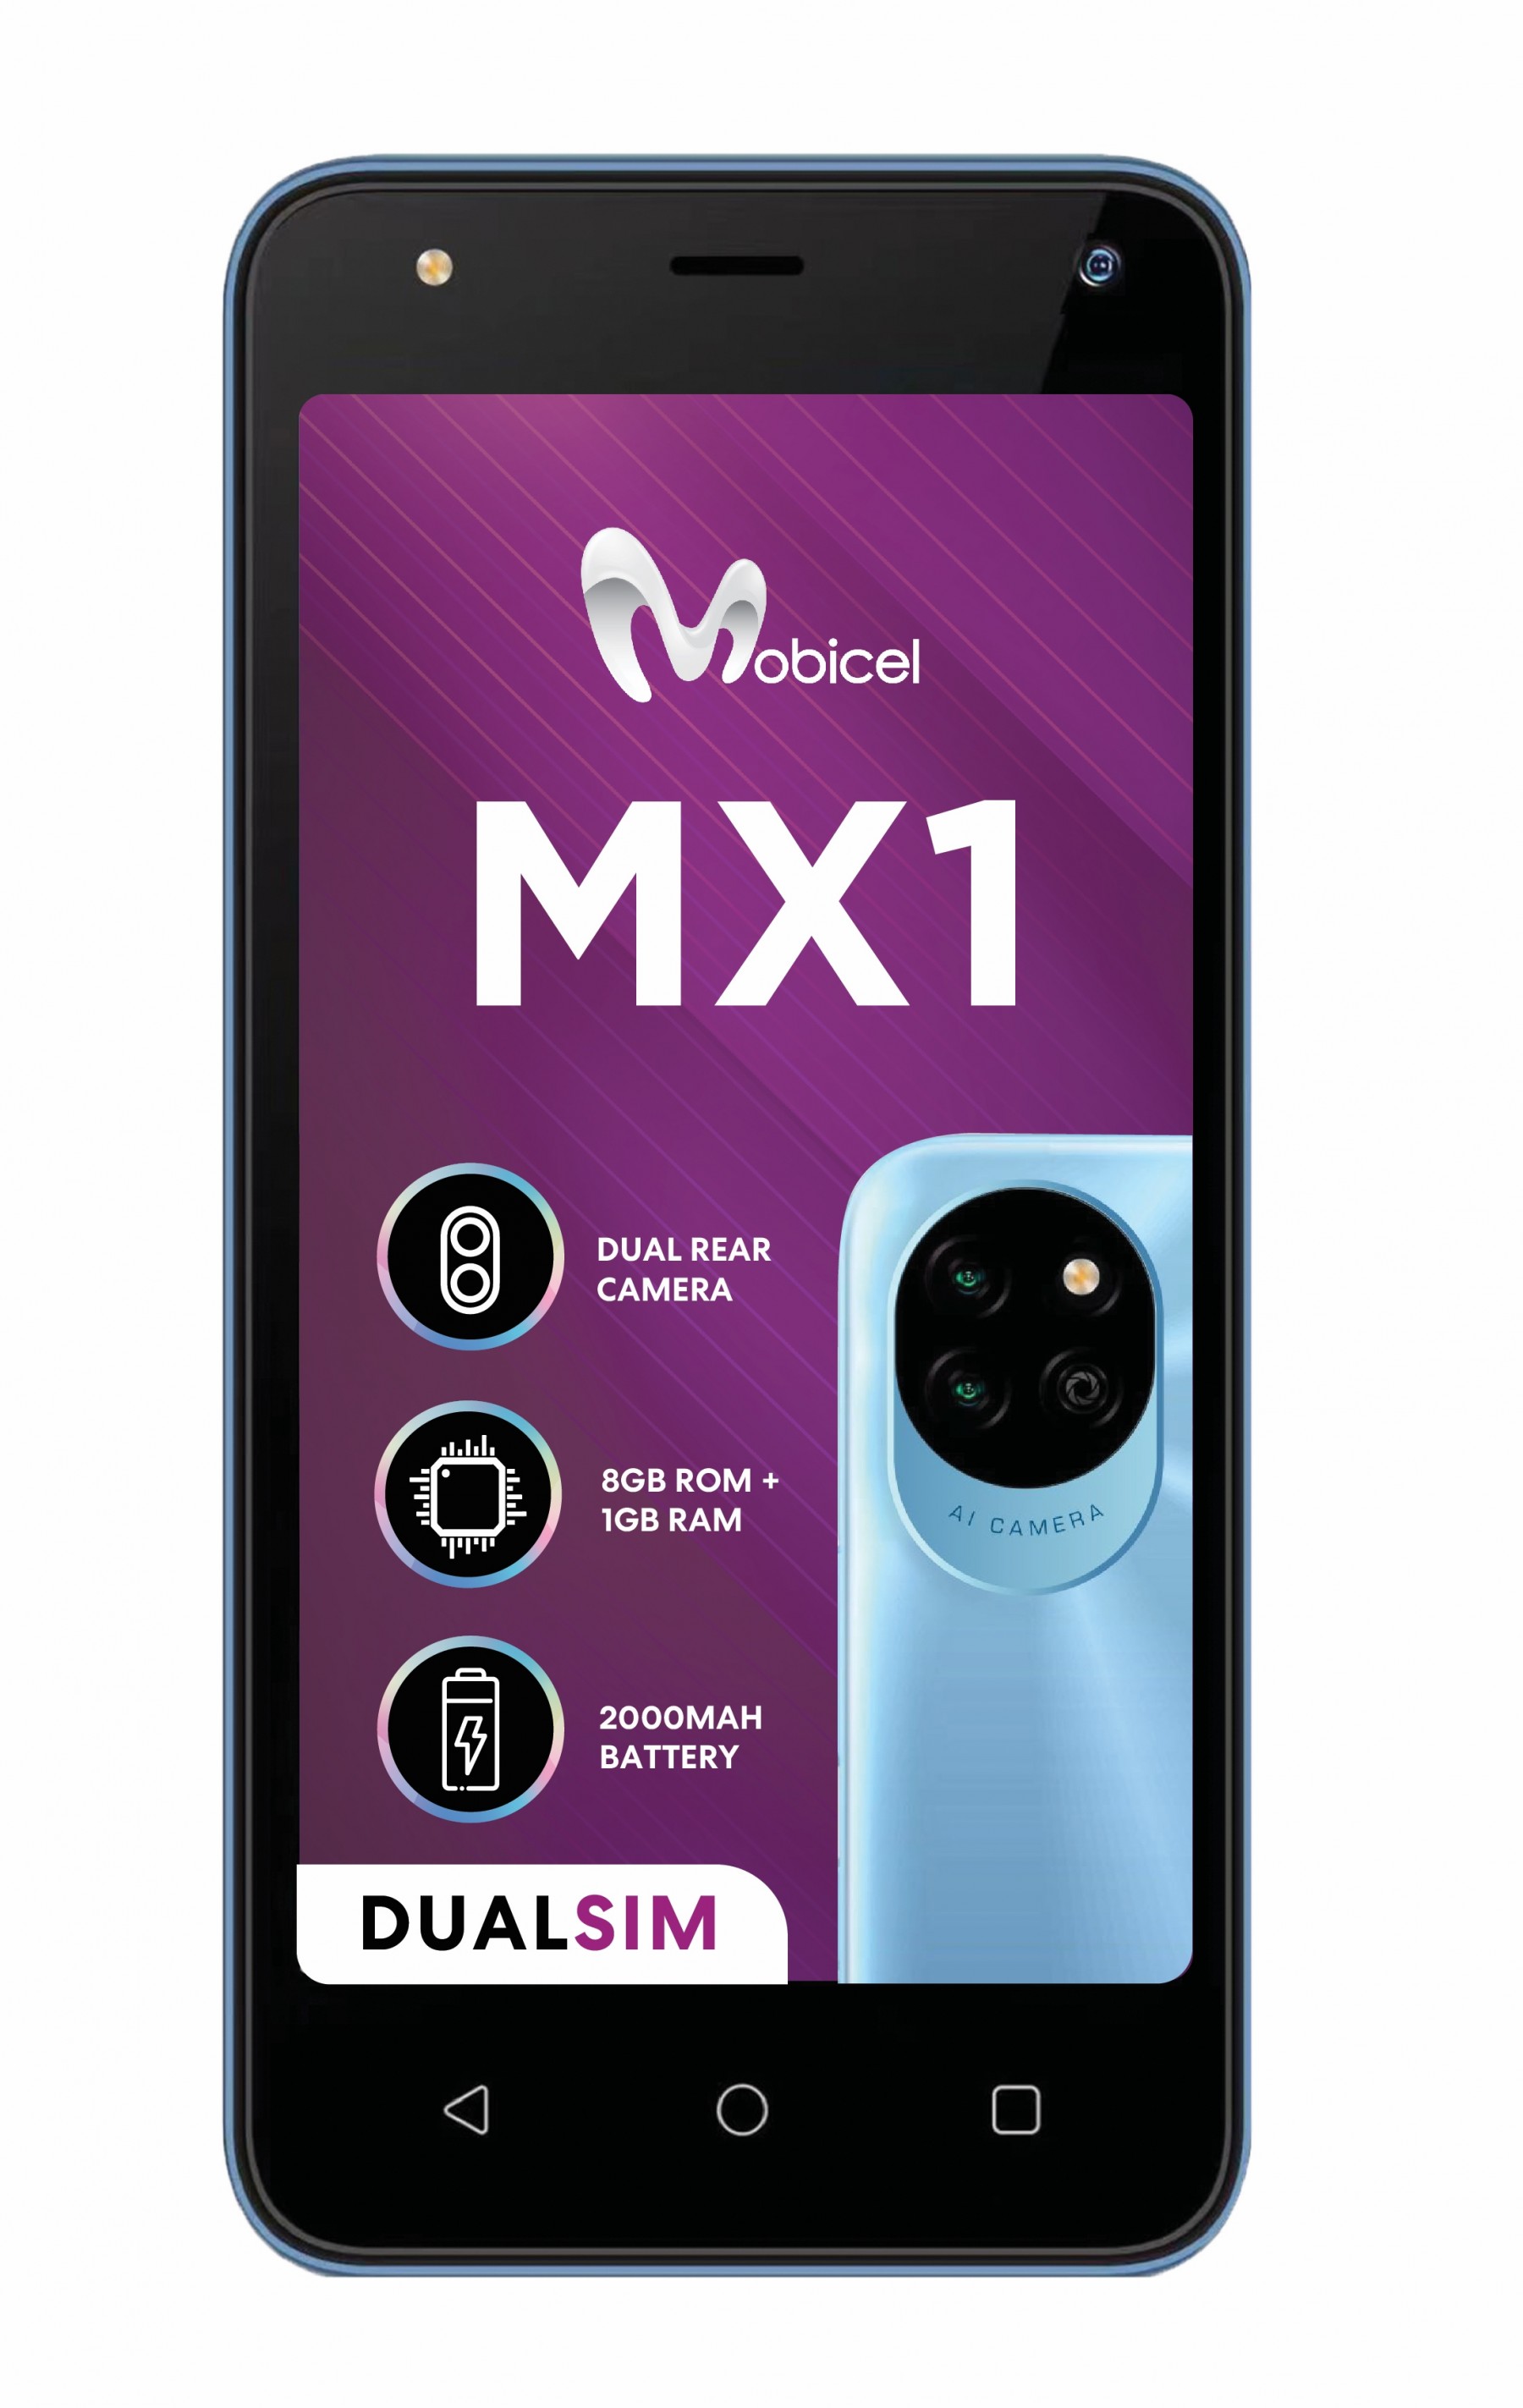 Mobicel MX1 (MTN)